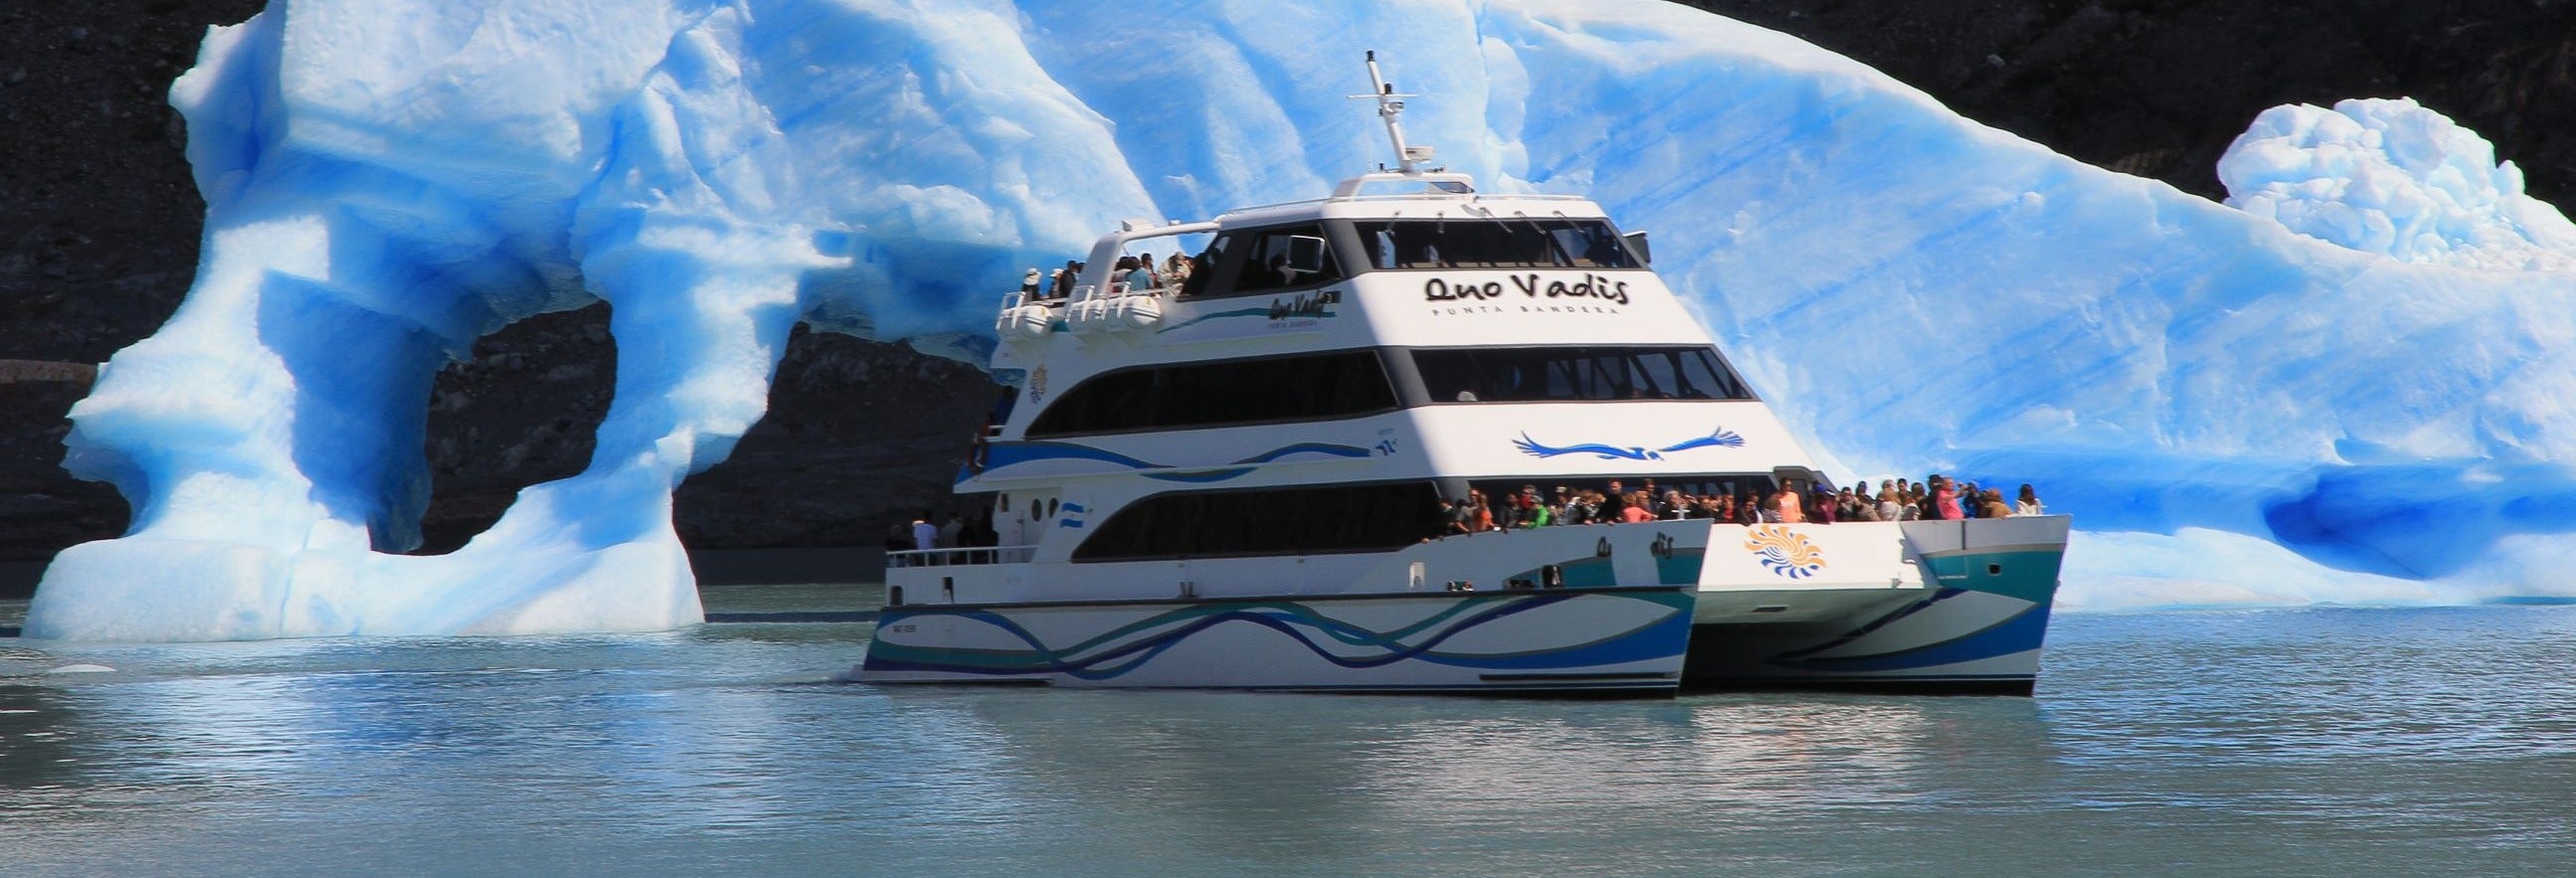 Excursão ao Parque Nacional Los Glaciares de barco